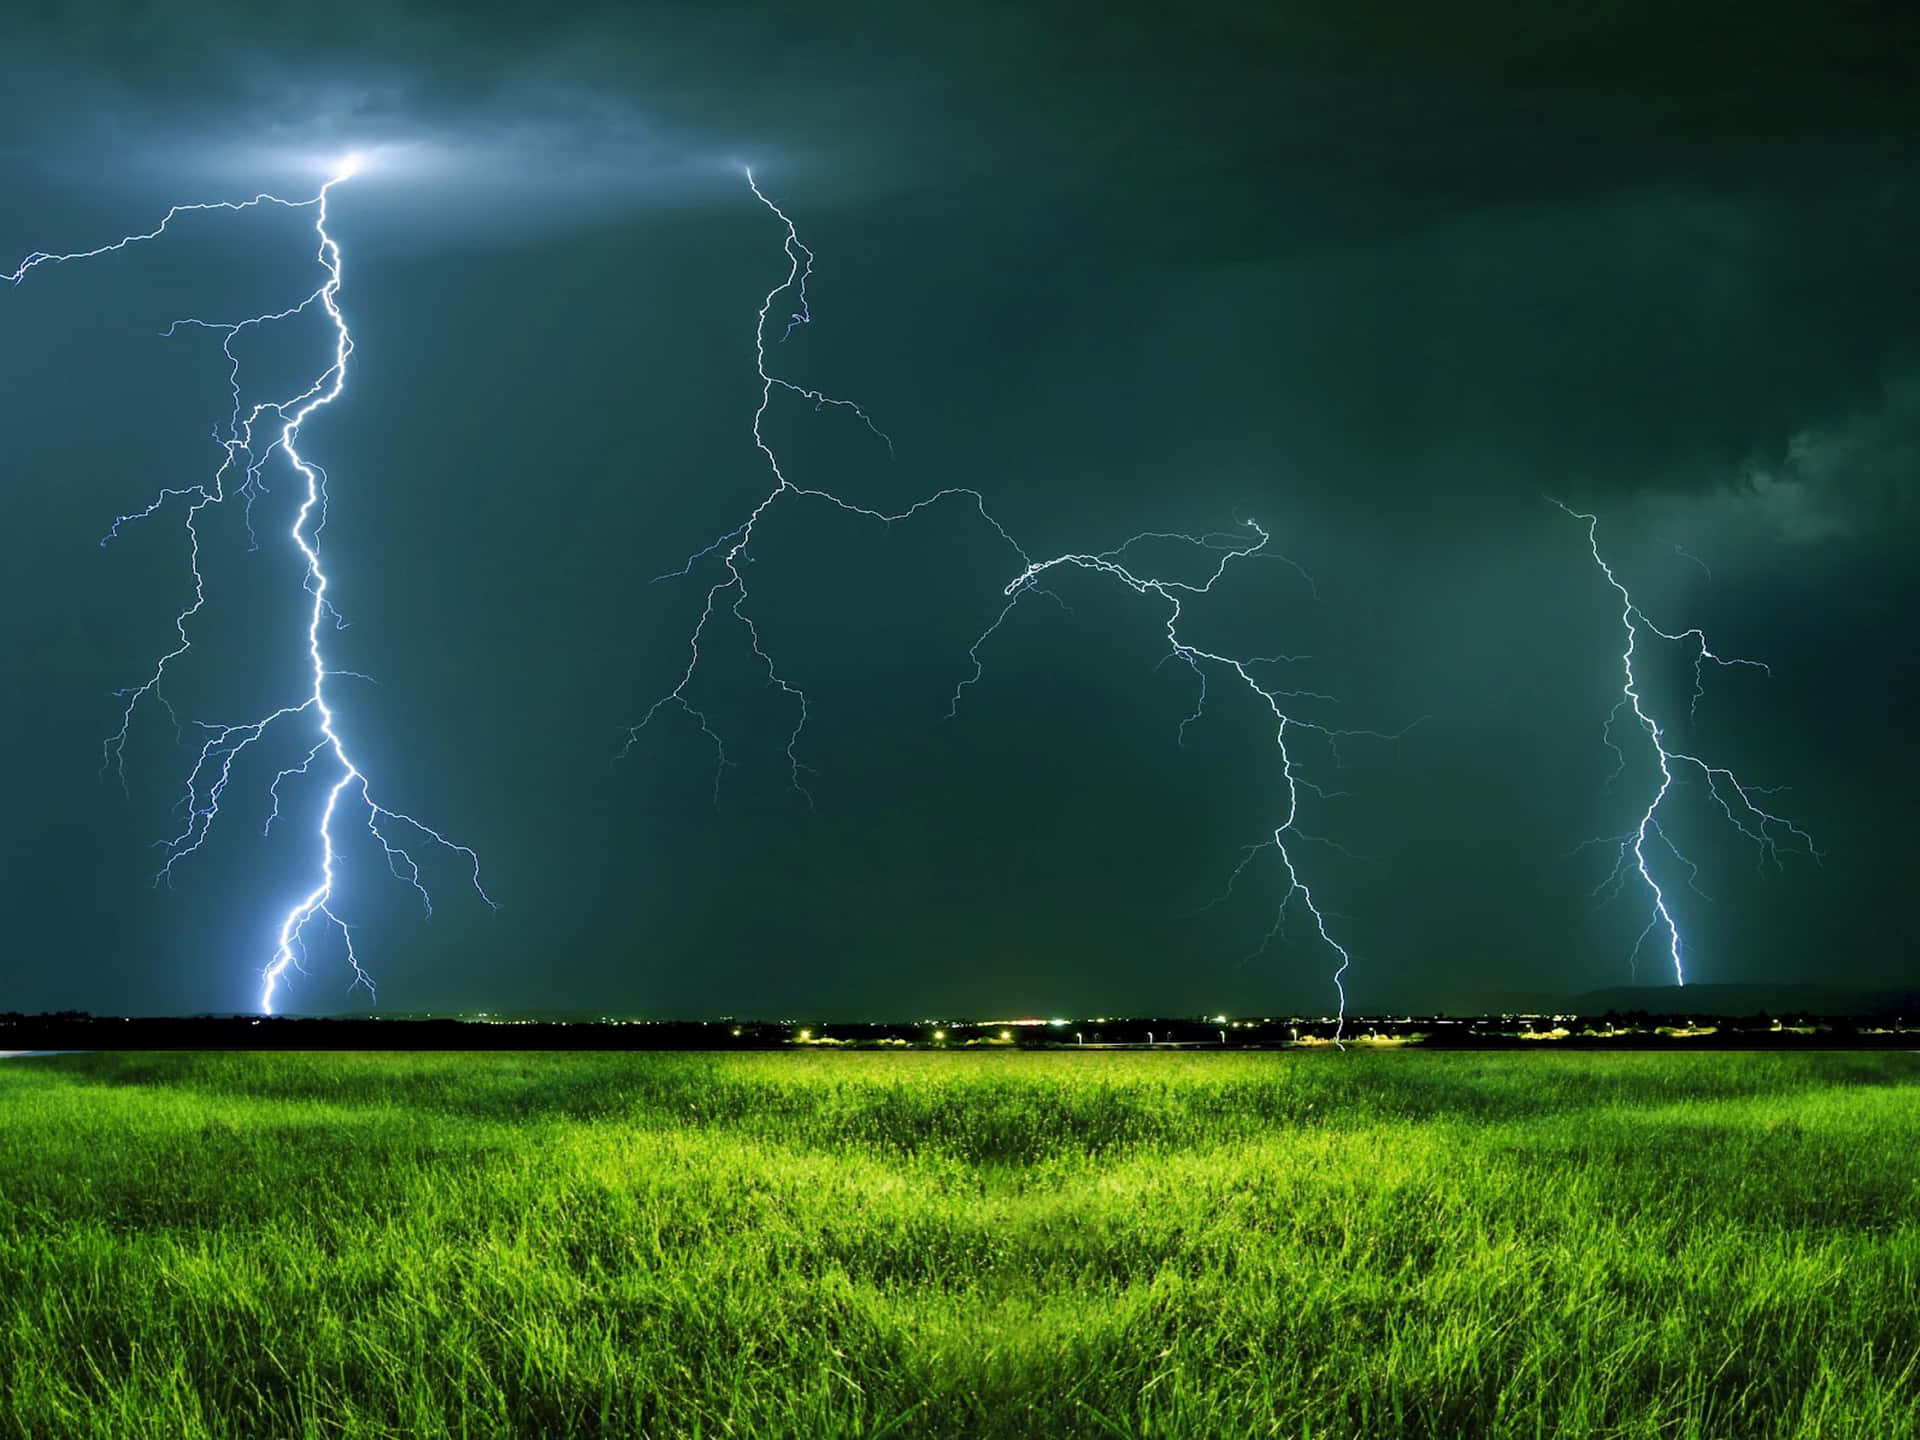 Electric Bolt of Lightning Illuminating the Night Sky